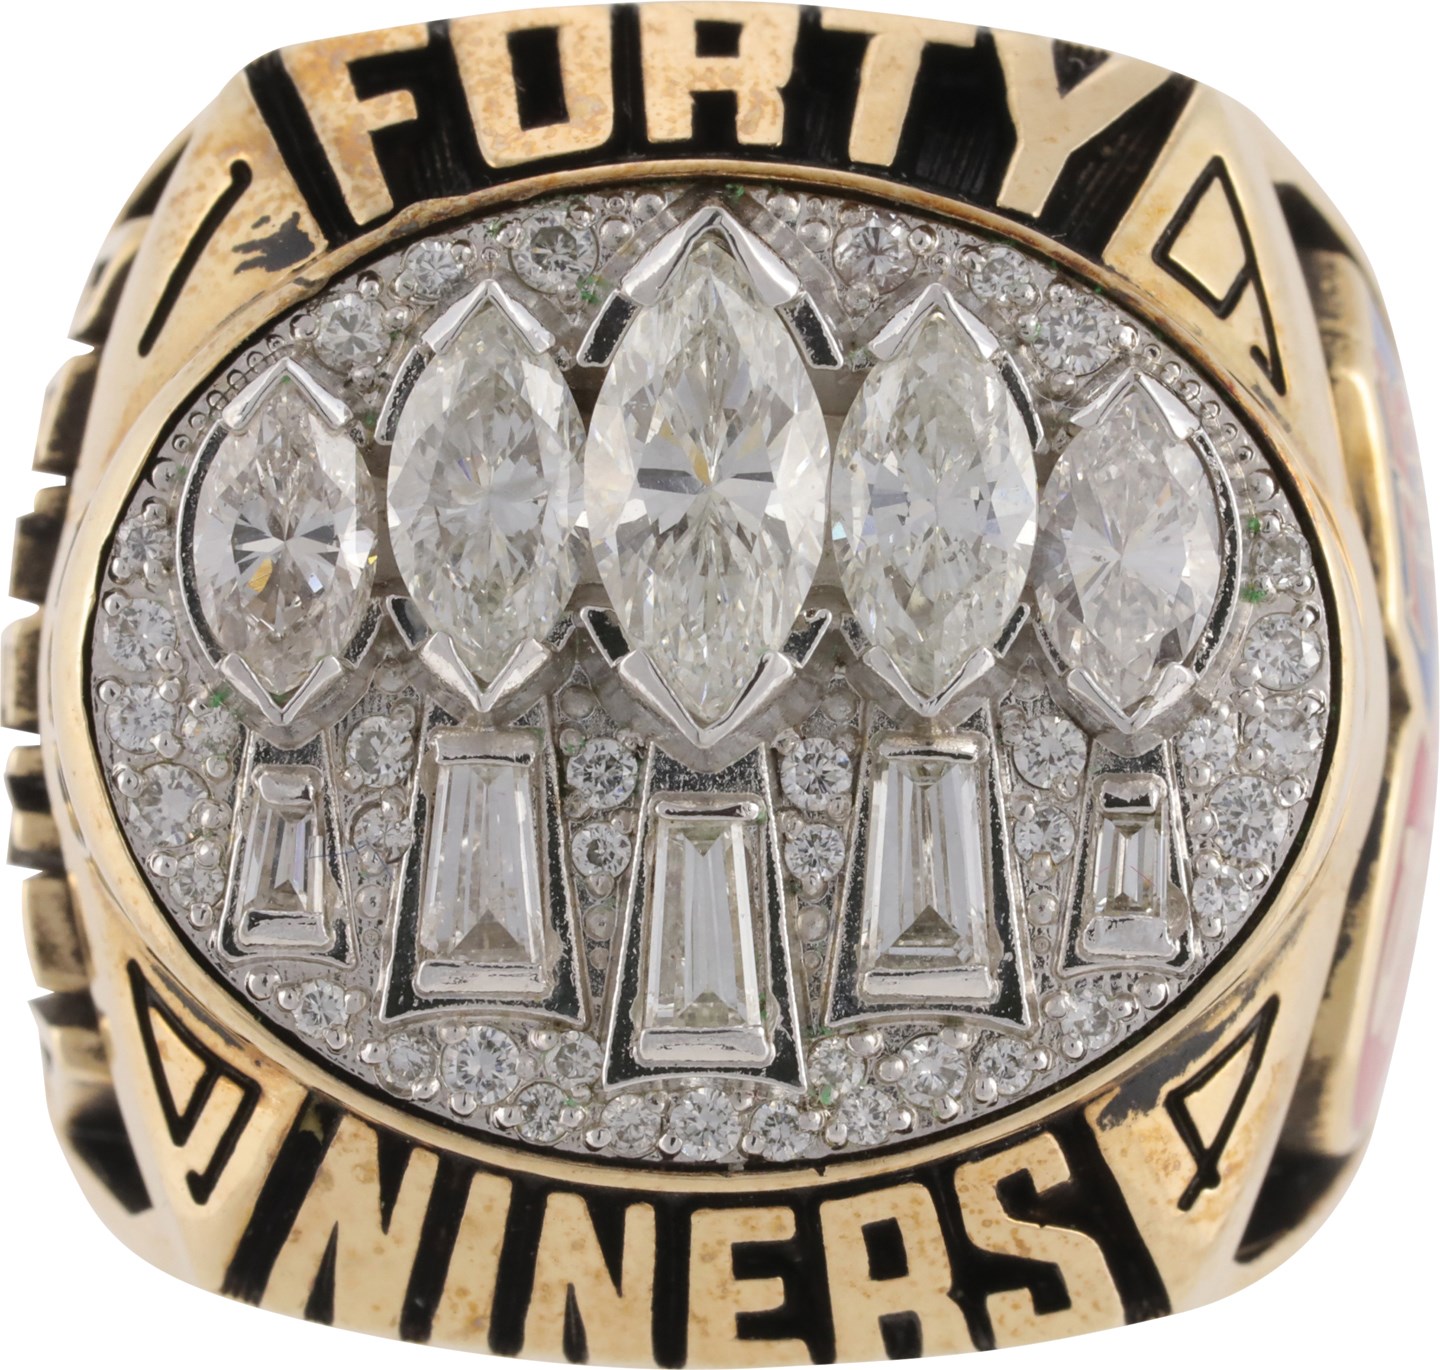 - 1995 San Francisco 49ers Super Bowl XXIX Championship Ring w/Original Display Box